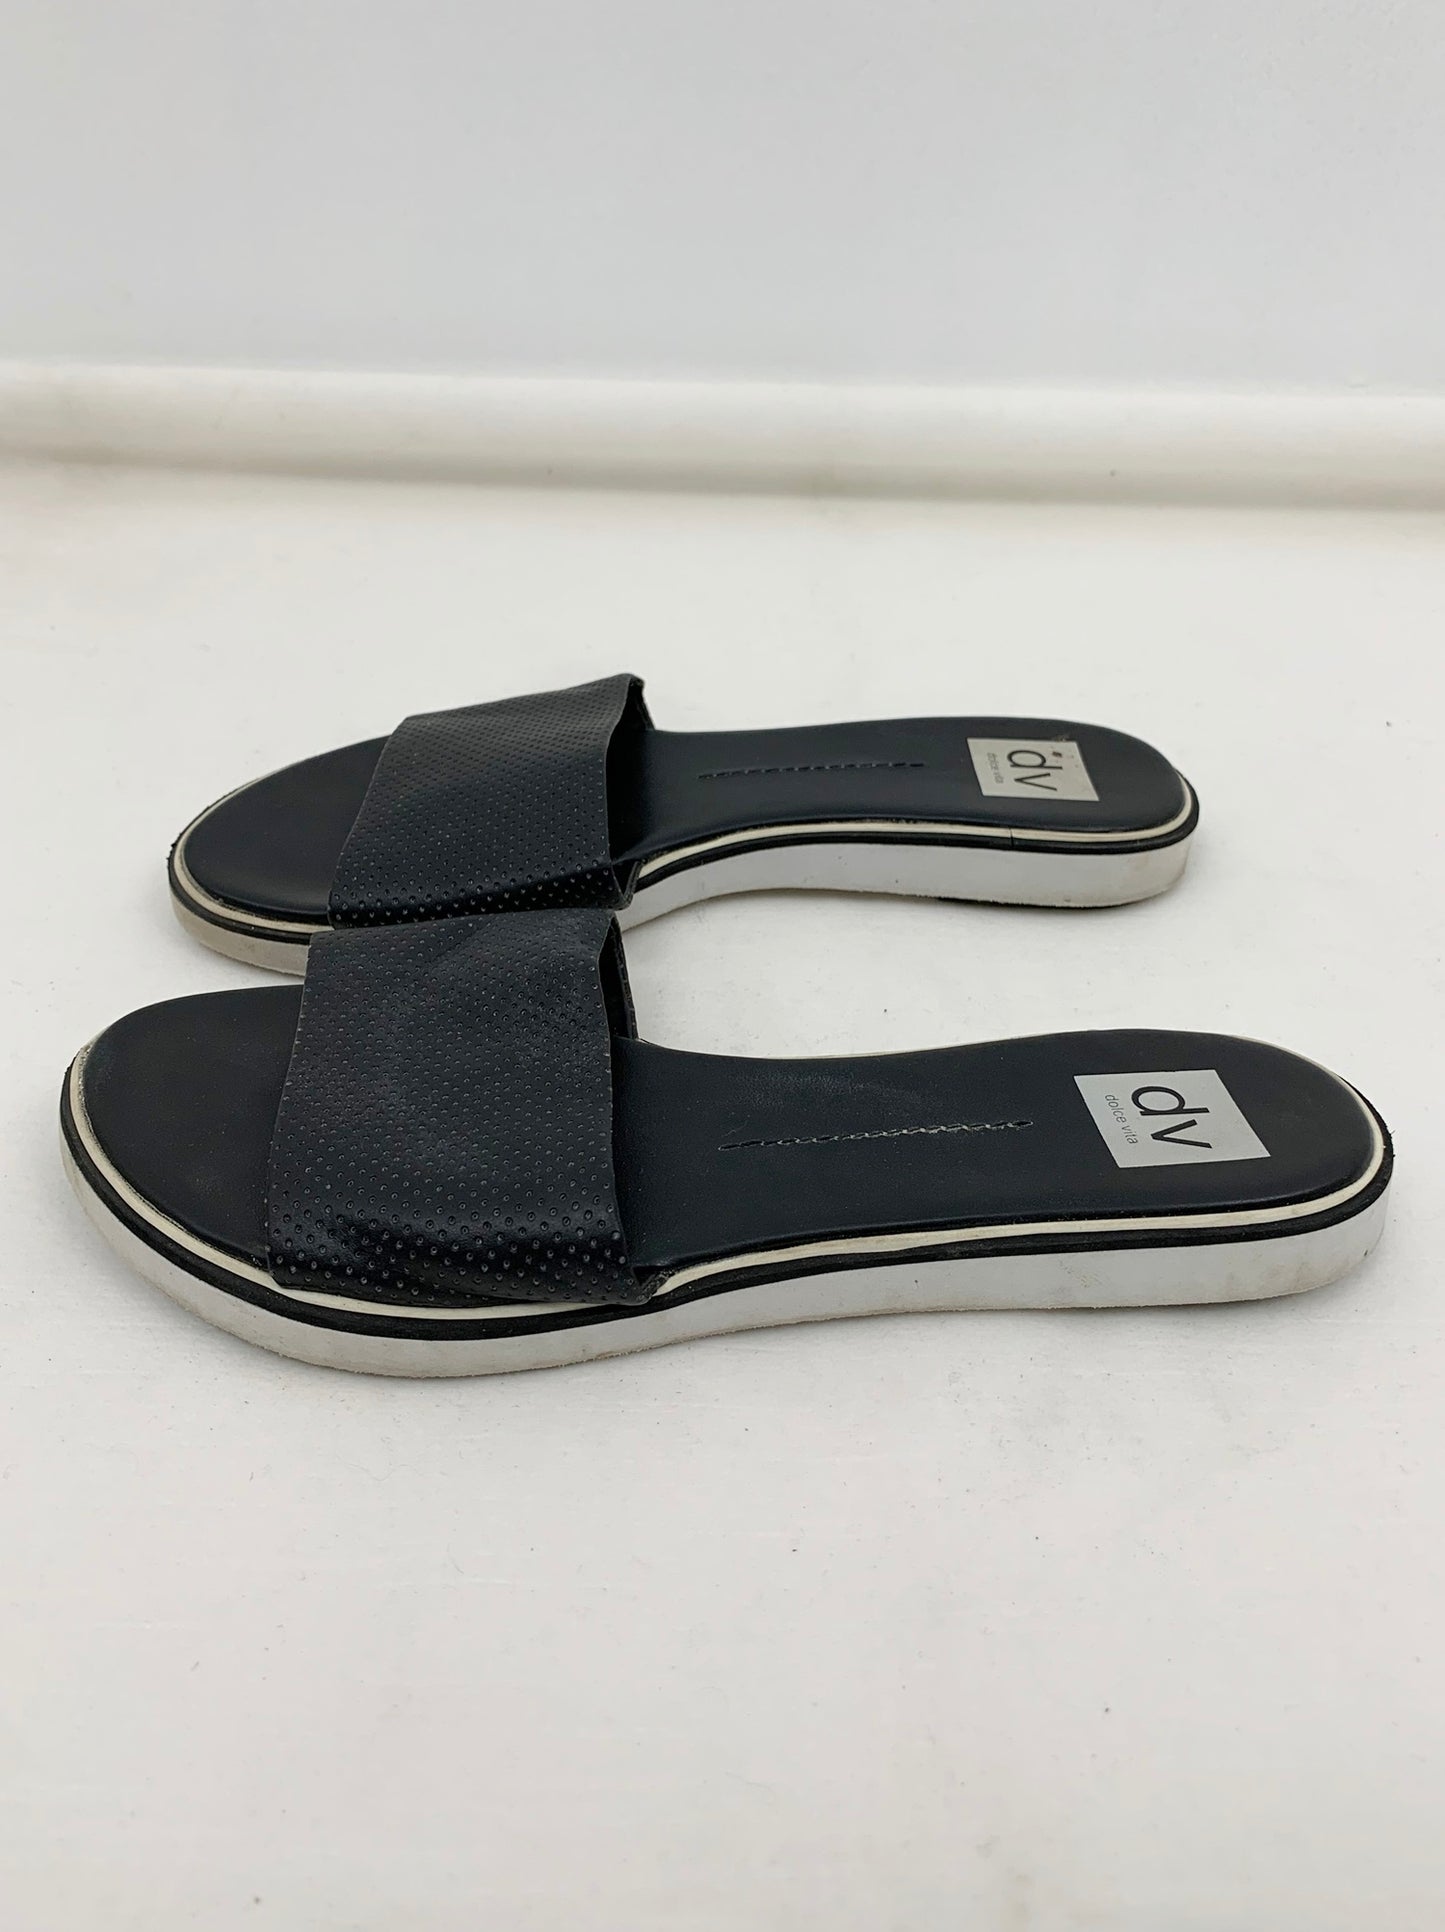 Breeze Leather Sandals Size 9